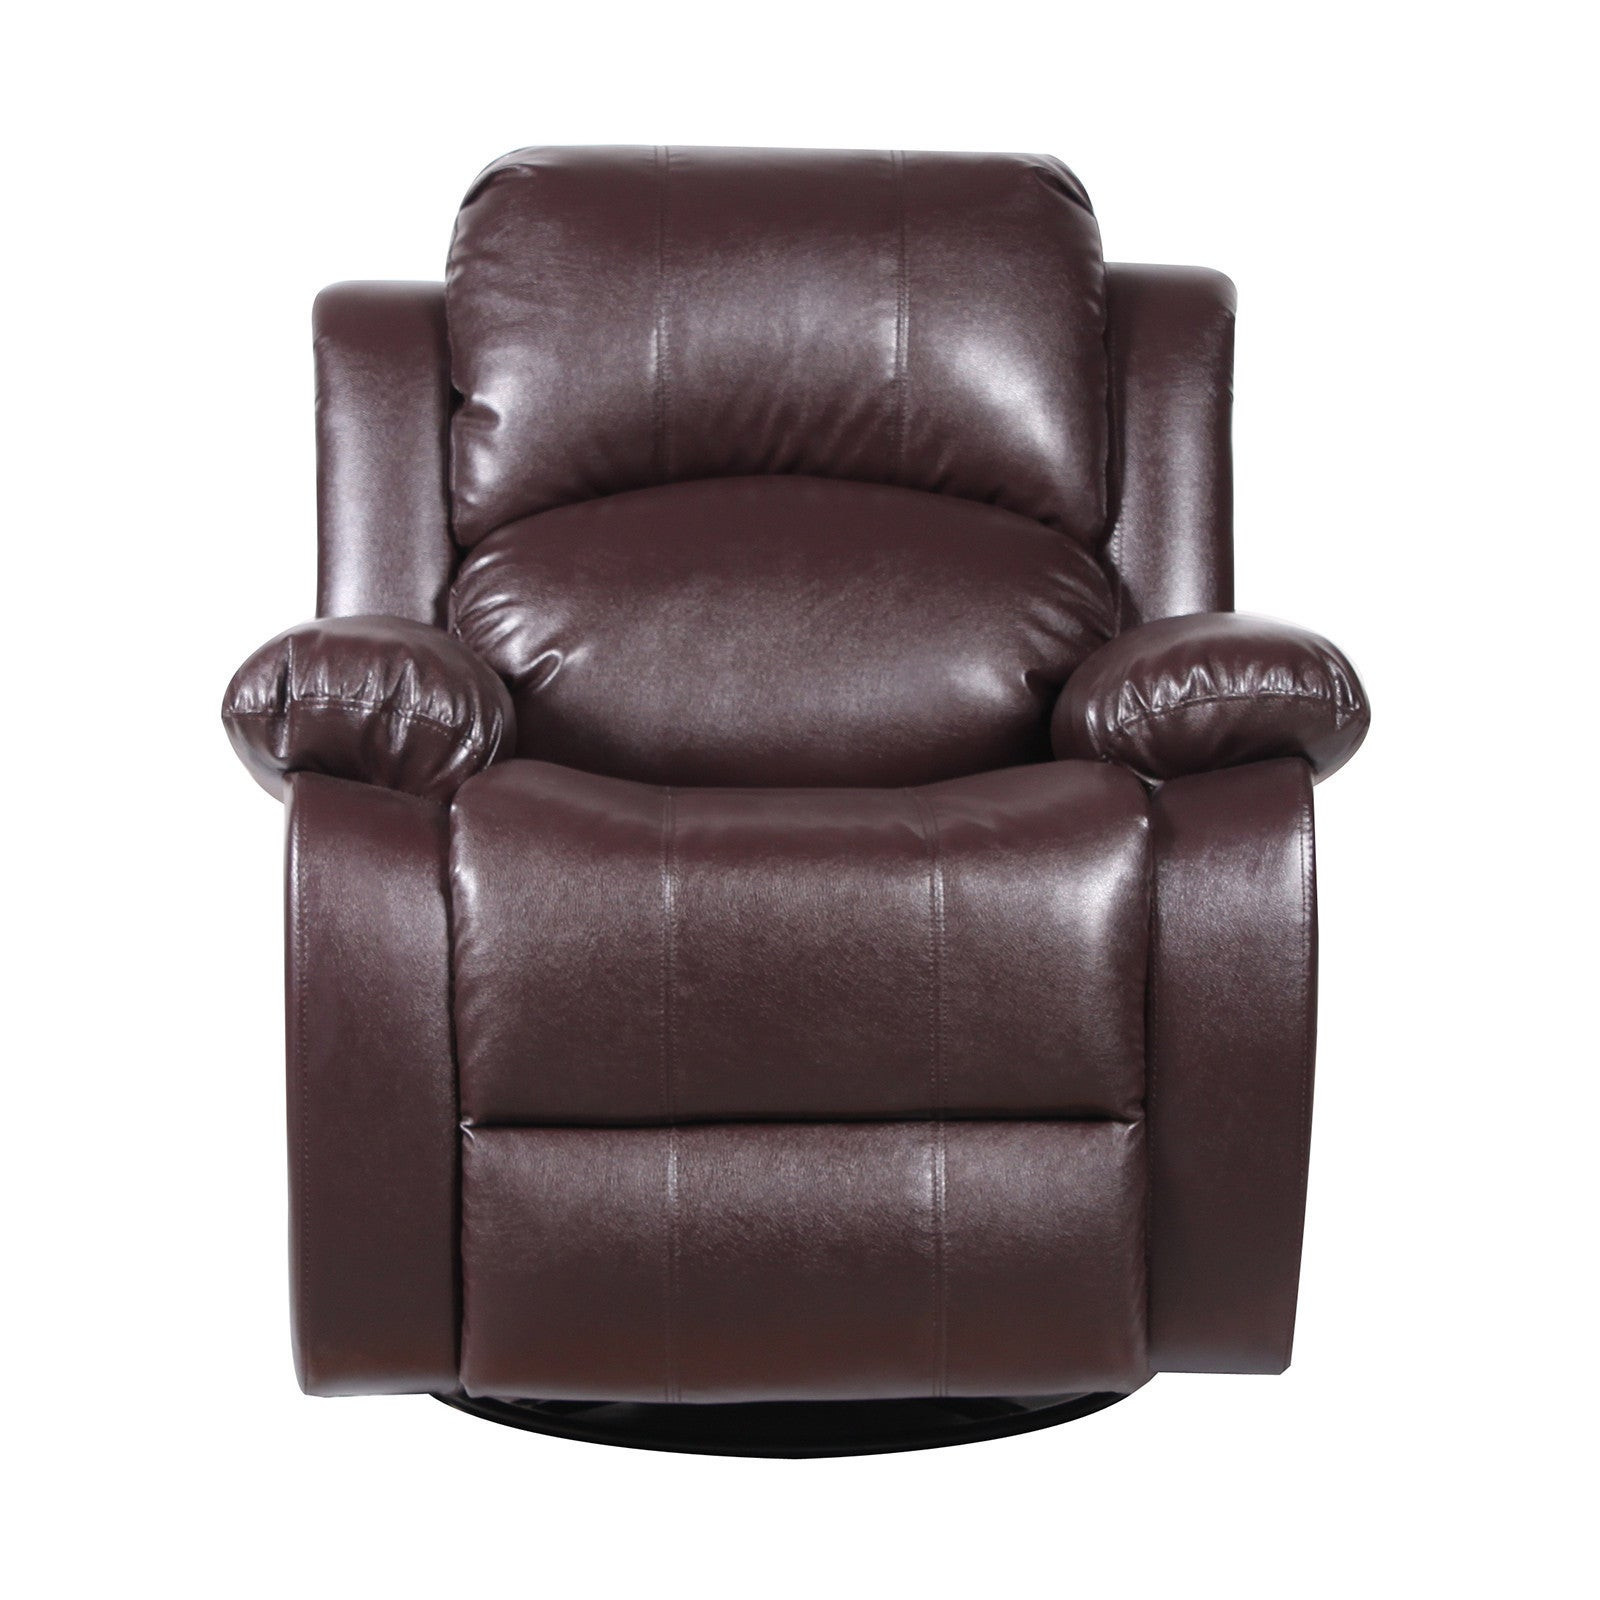 Swivel Living Room Chair
 Bonded Leather Rocker and Swivel Recliner Living Room